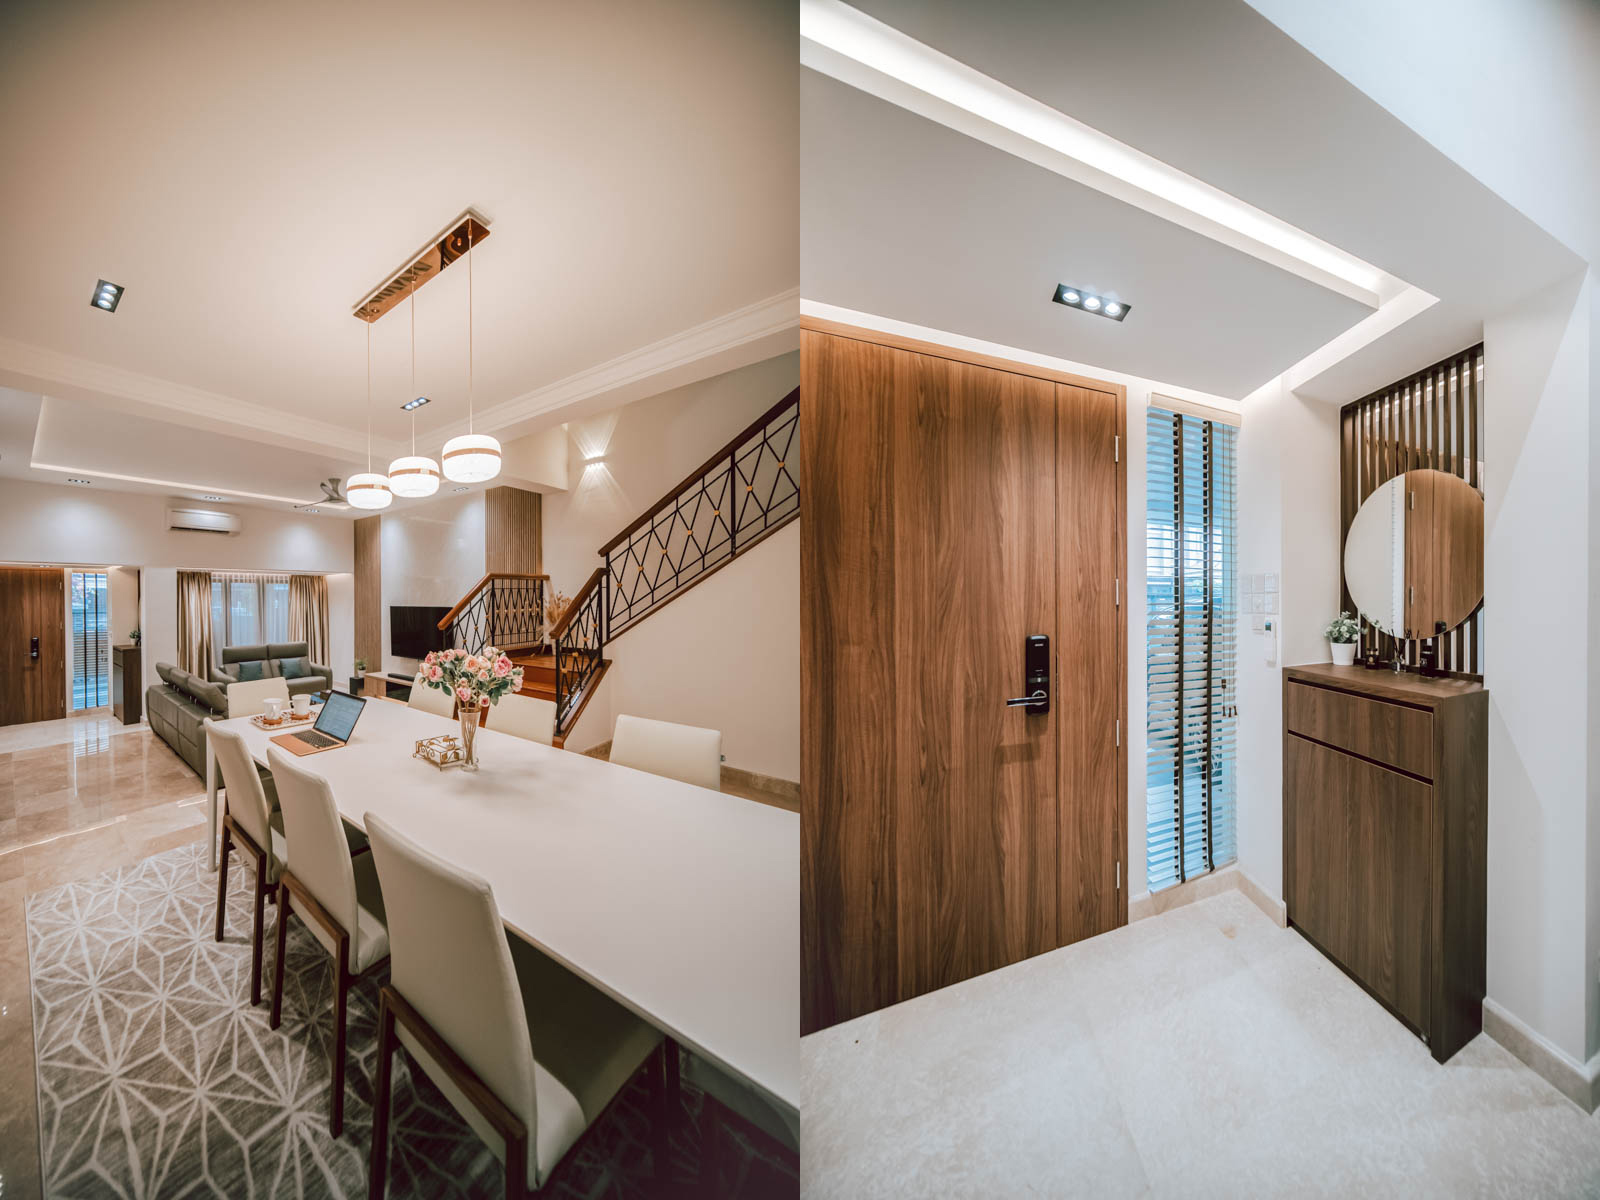 Serangoon Landed House: Designed by Nicky Haw+Jeff Tan